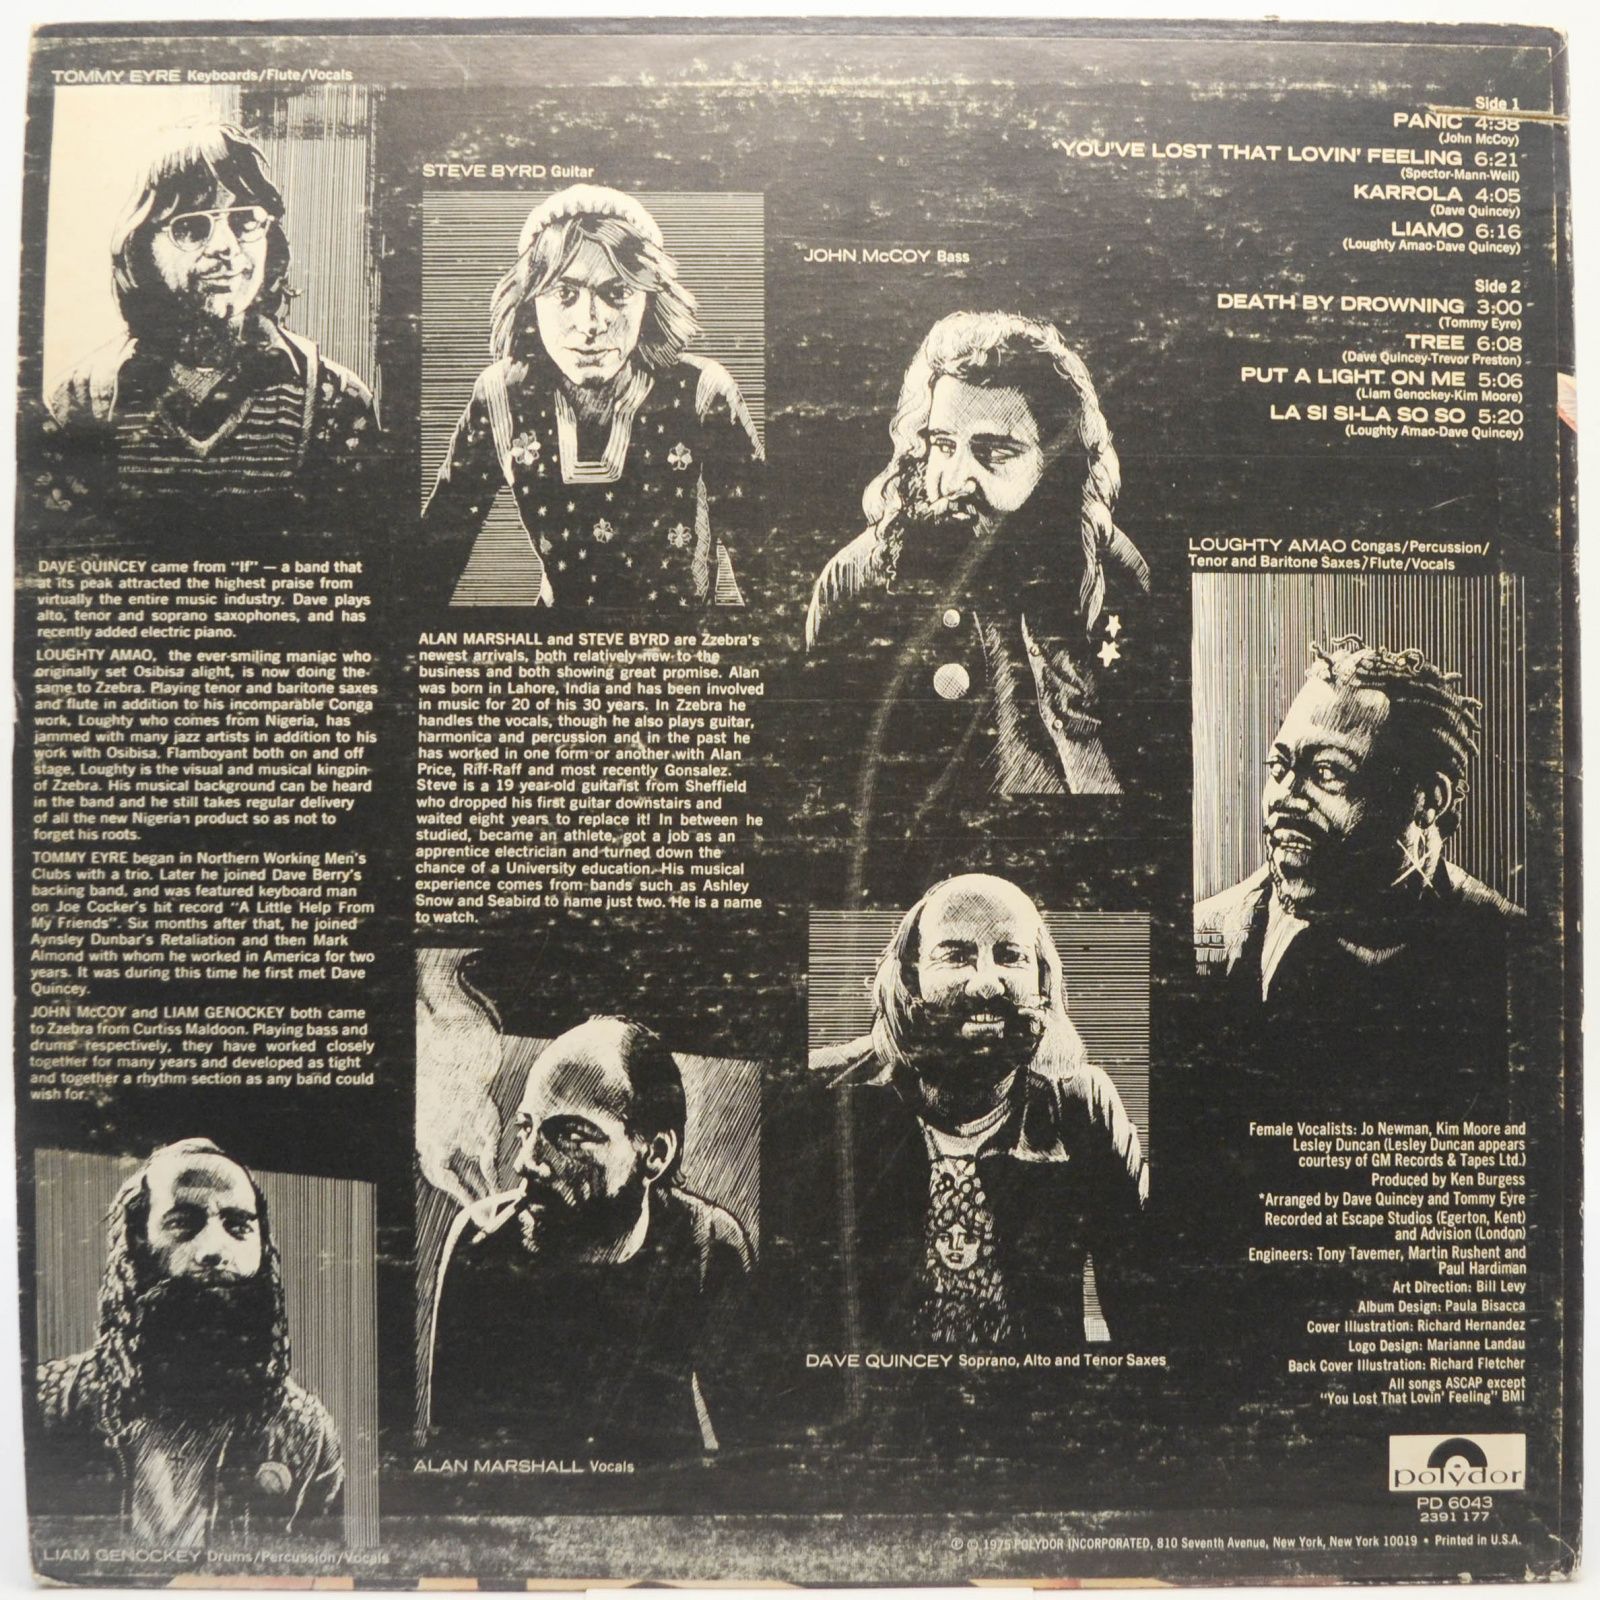 Zzebra — Panic (USA), 1975